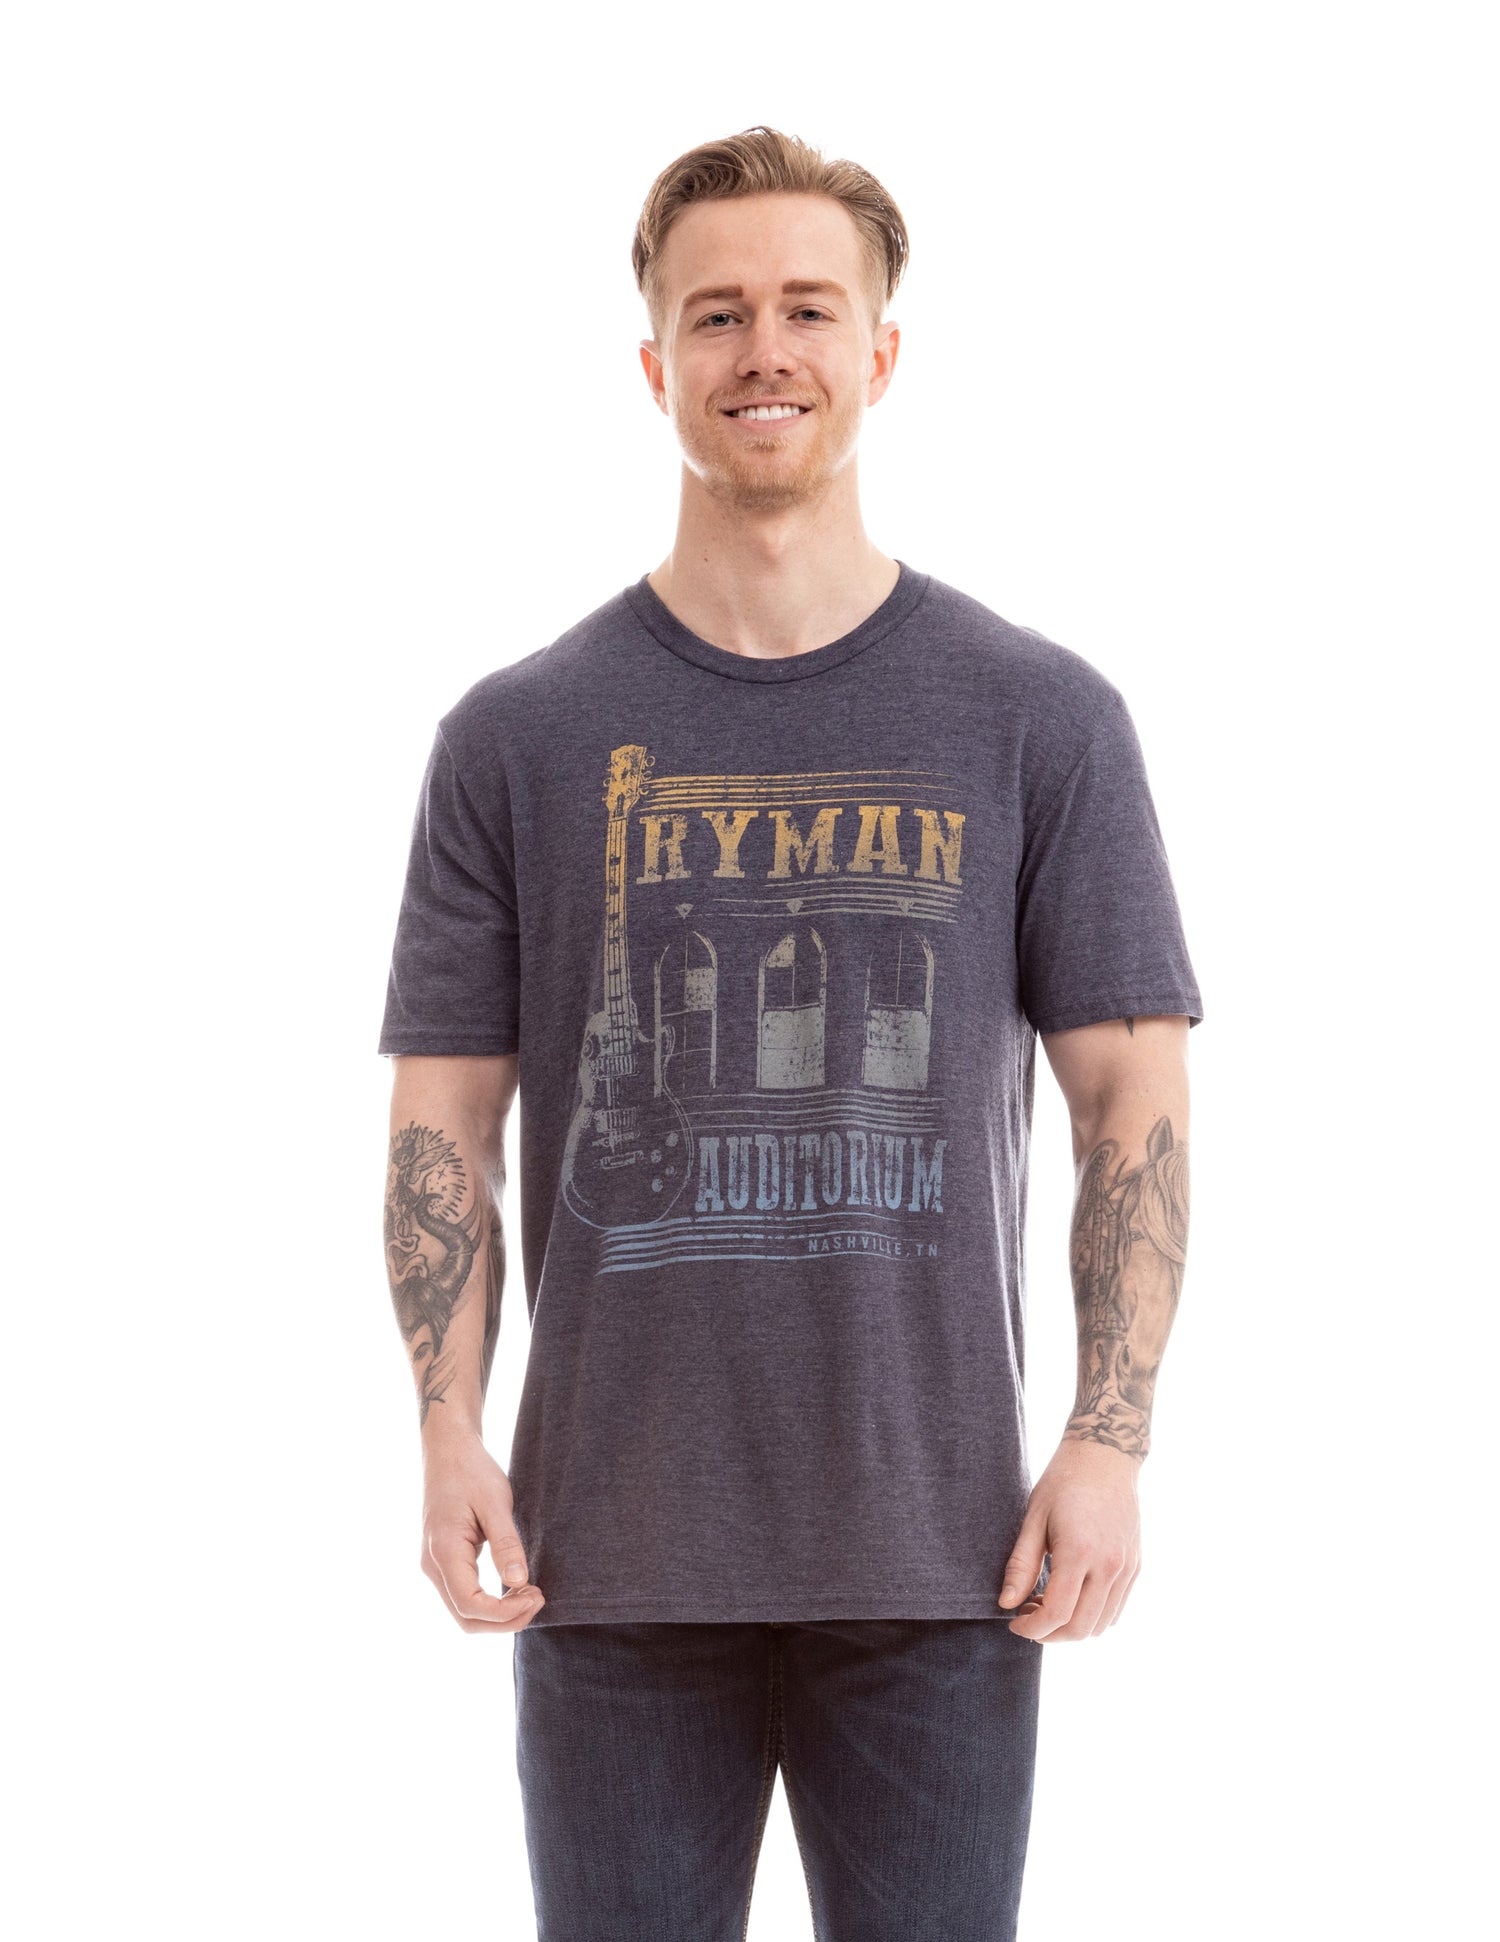 Ryman Gradient Guitar T-Shirt